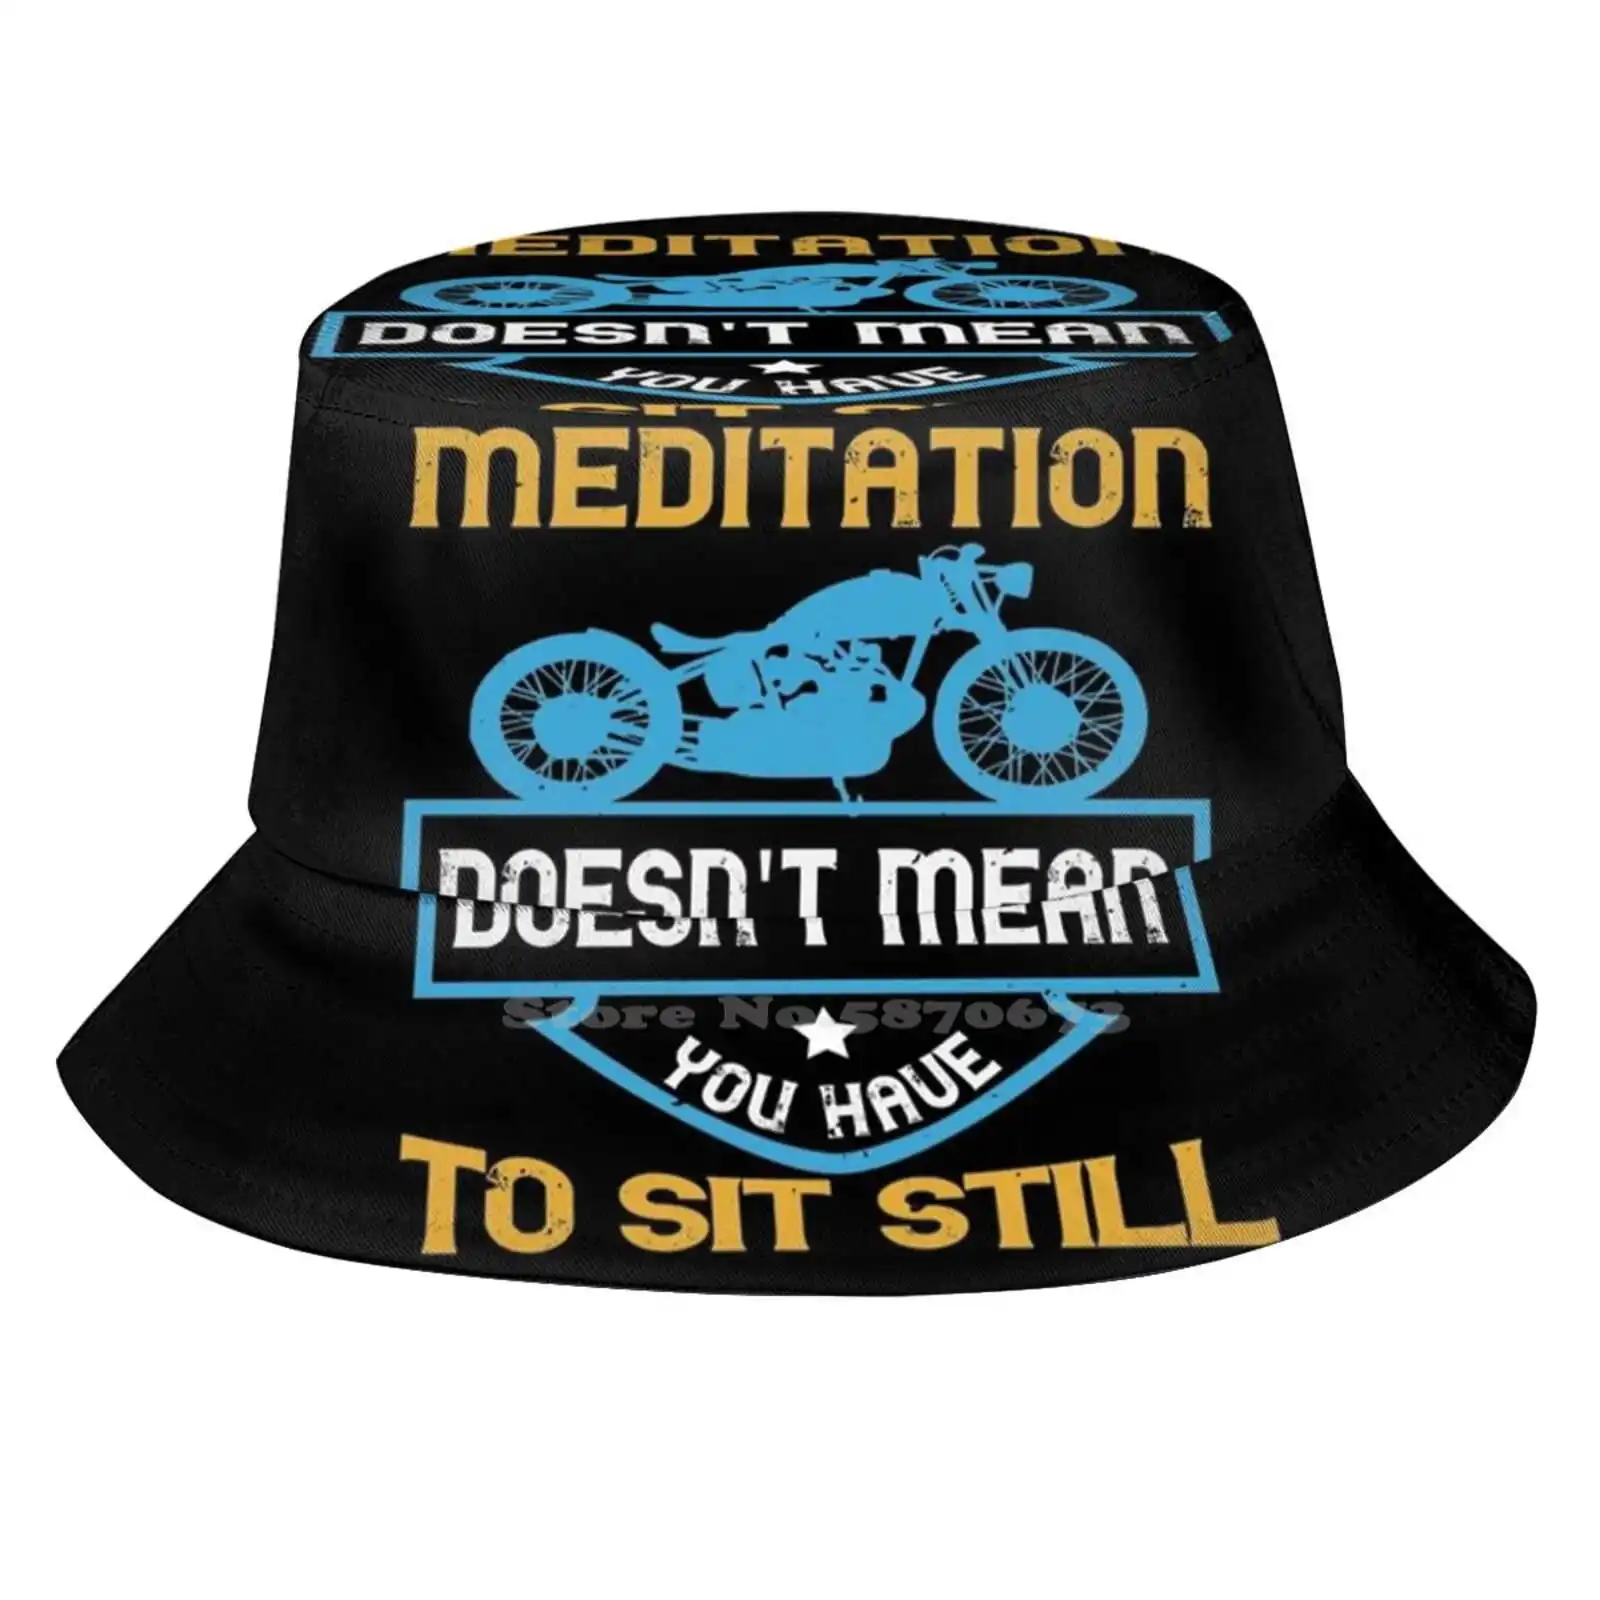 

Meditation Doesn't Mean You Have To Sit Still Pattern Hats Outdoor Hat Sun Cap Motorcycle Motorbike Motorcycling Bike Biker